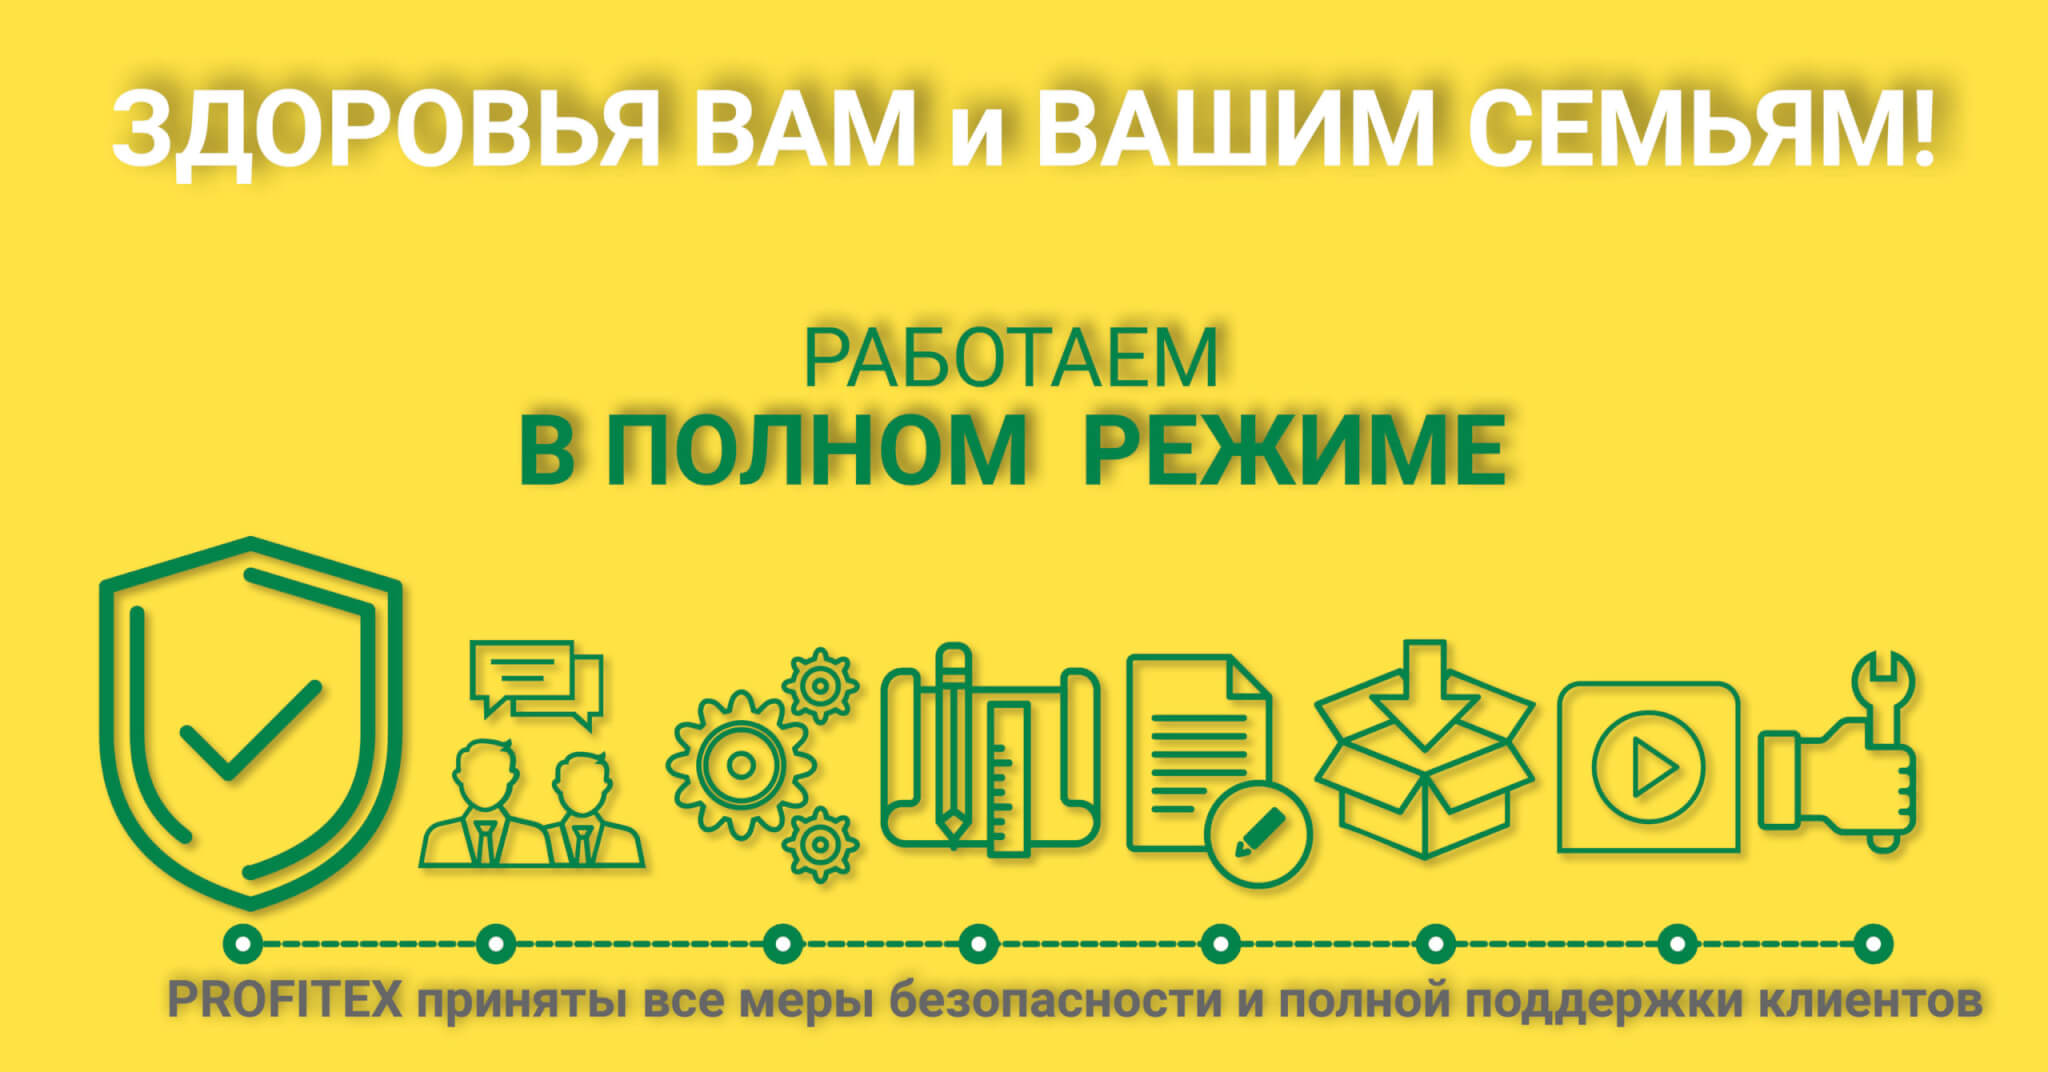 зелений BANNER fb КАРАНТИН 25_03_2020